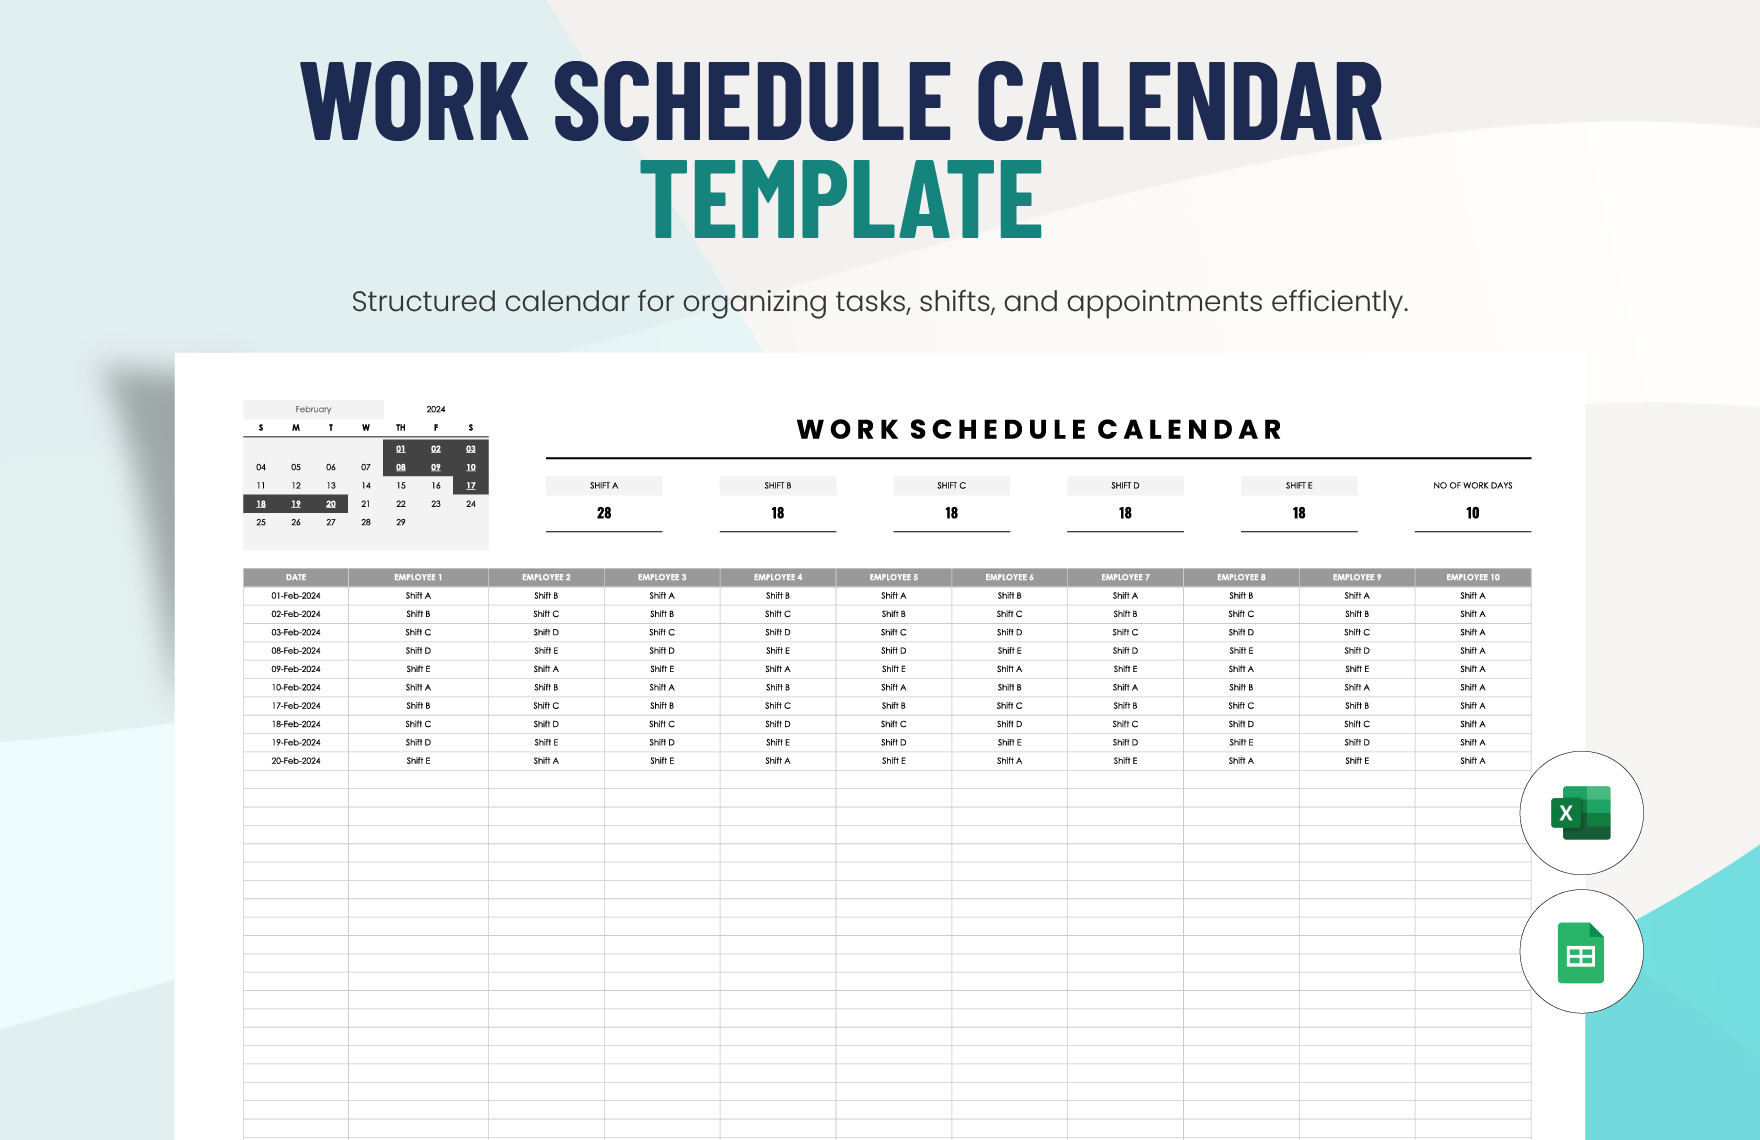 Free Work Schedule Calendar Template in Excel, Google Sheets